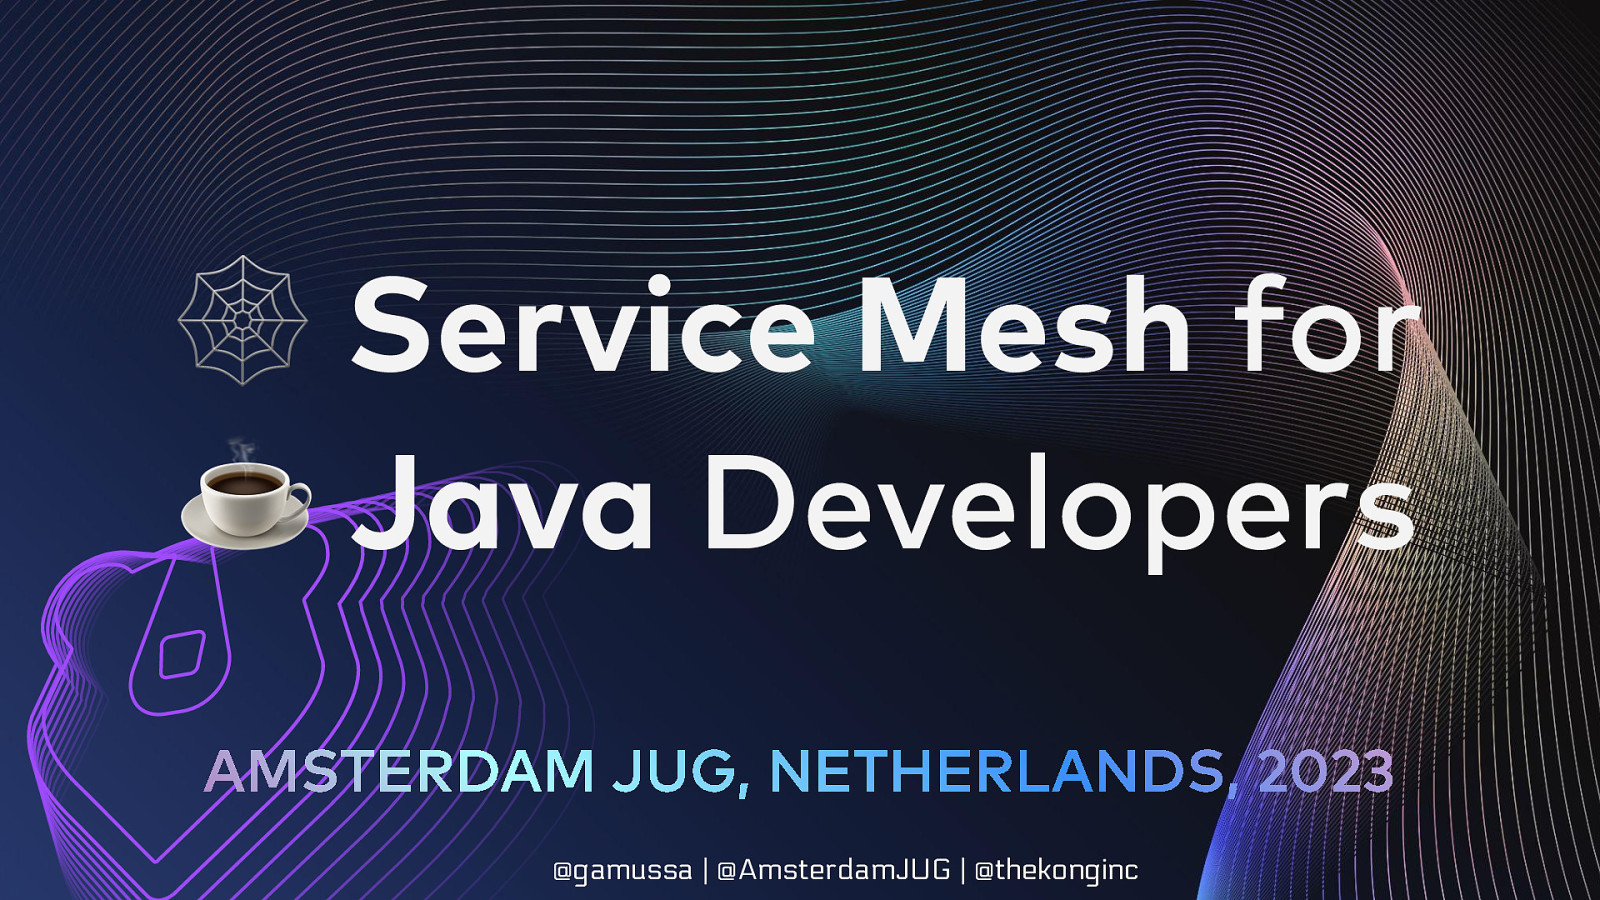 Service Mesh for Java Developers